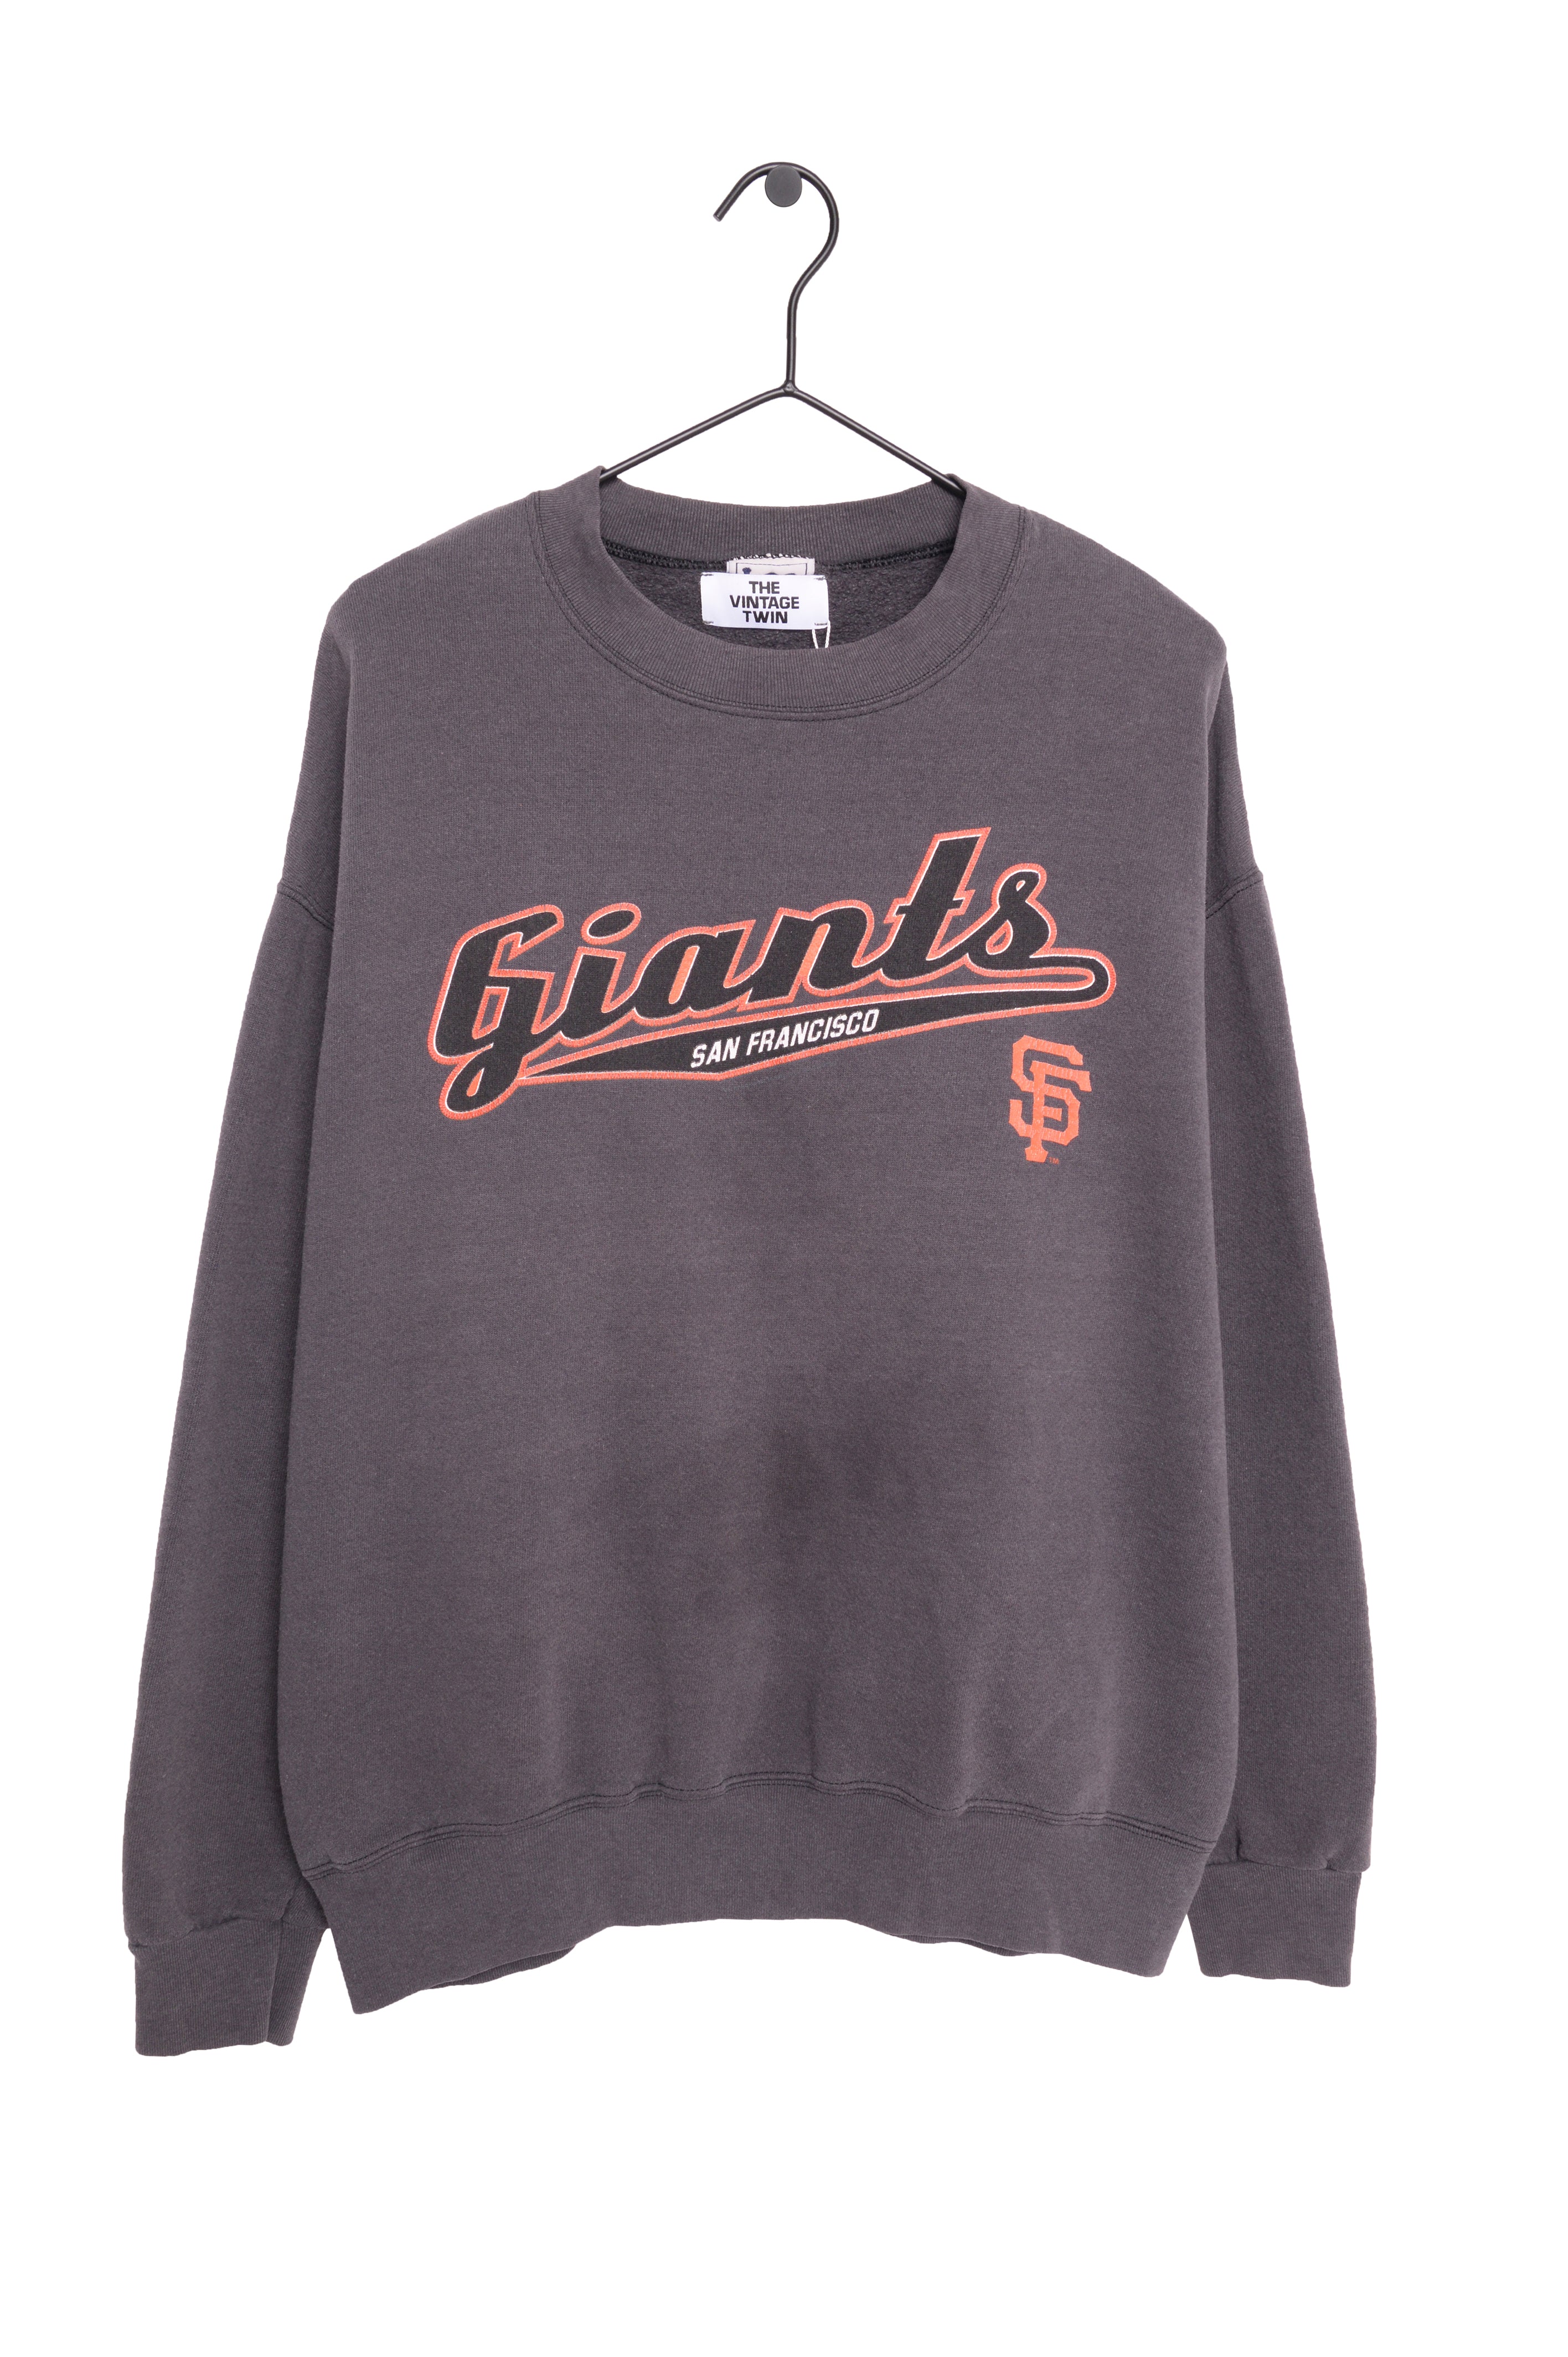 Unisex Vintage 1990s Faded San Francisco Giants Sweatshirt